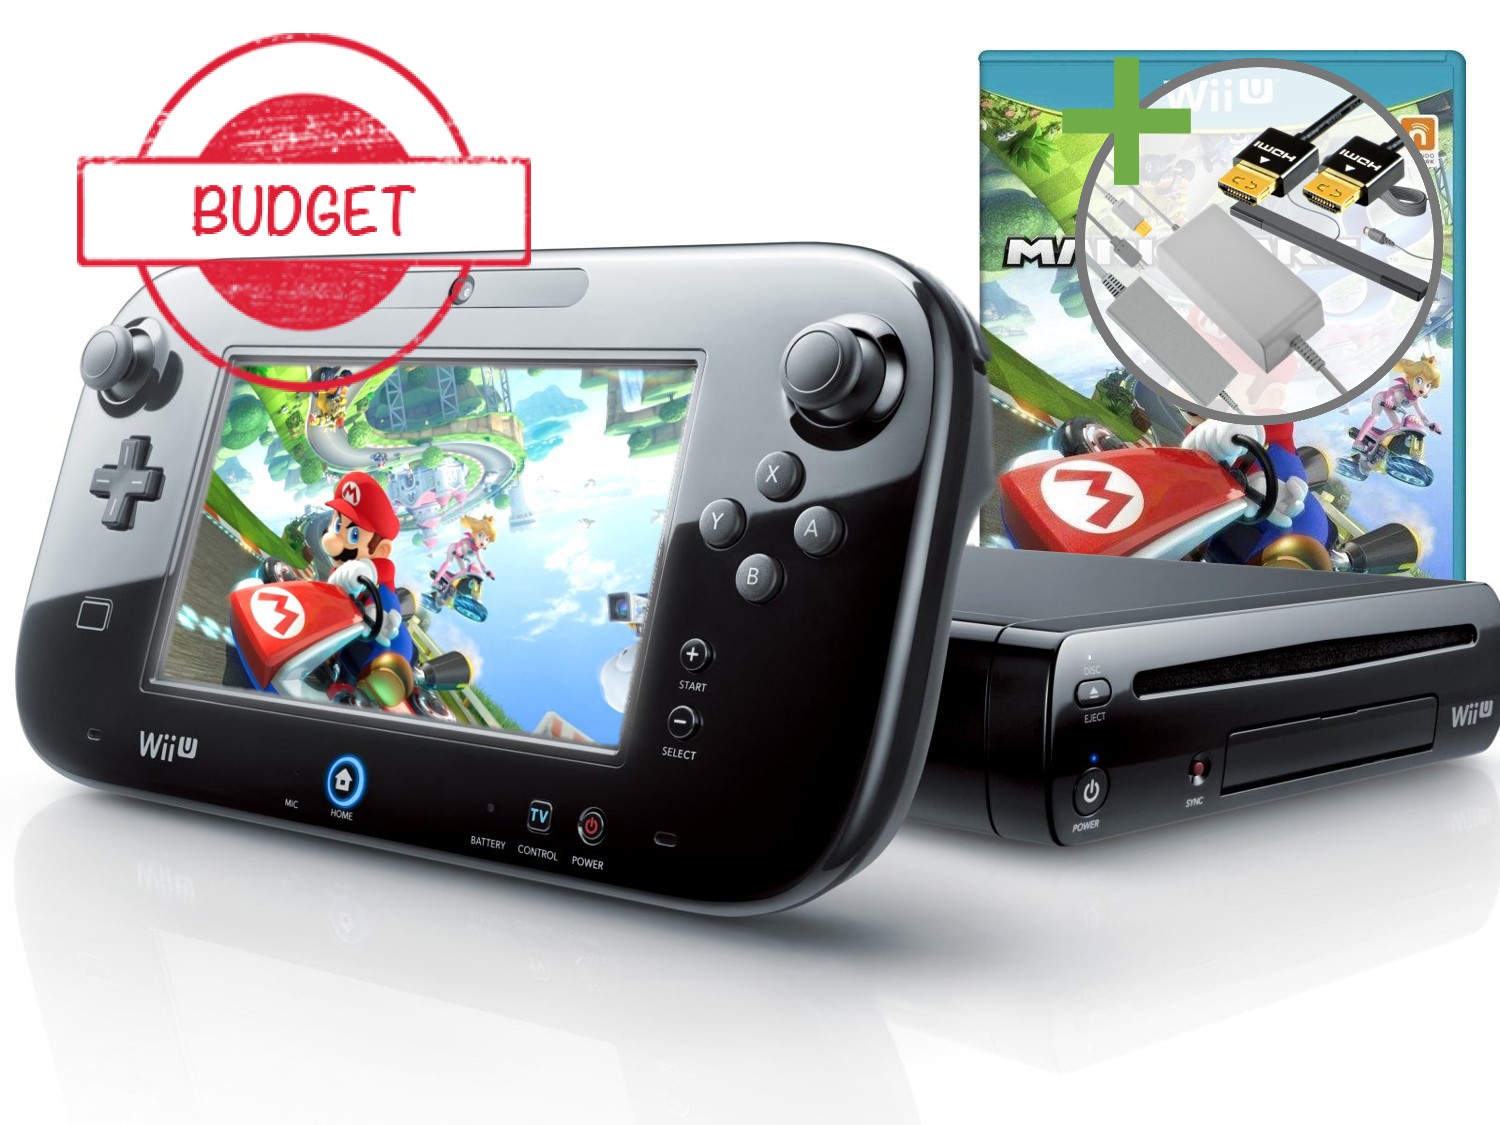 Nintendo Wii U Starter Pack - Mario Kart 8 Edition - Budget - Wii U Hardware